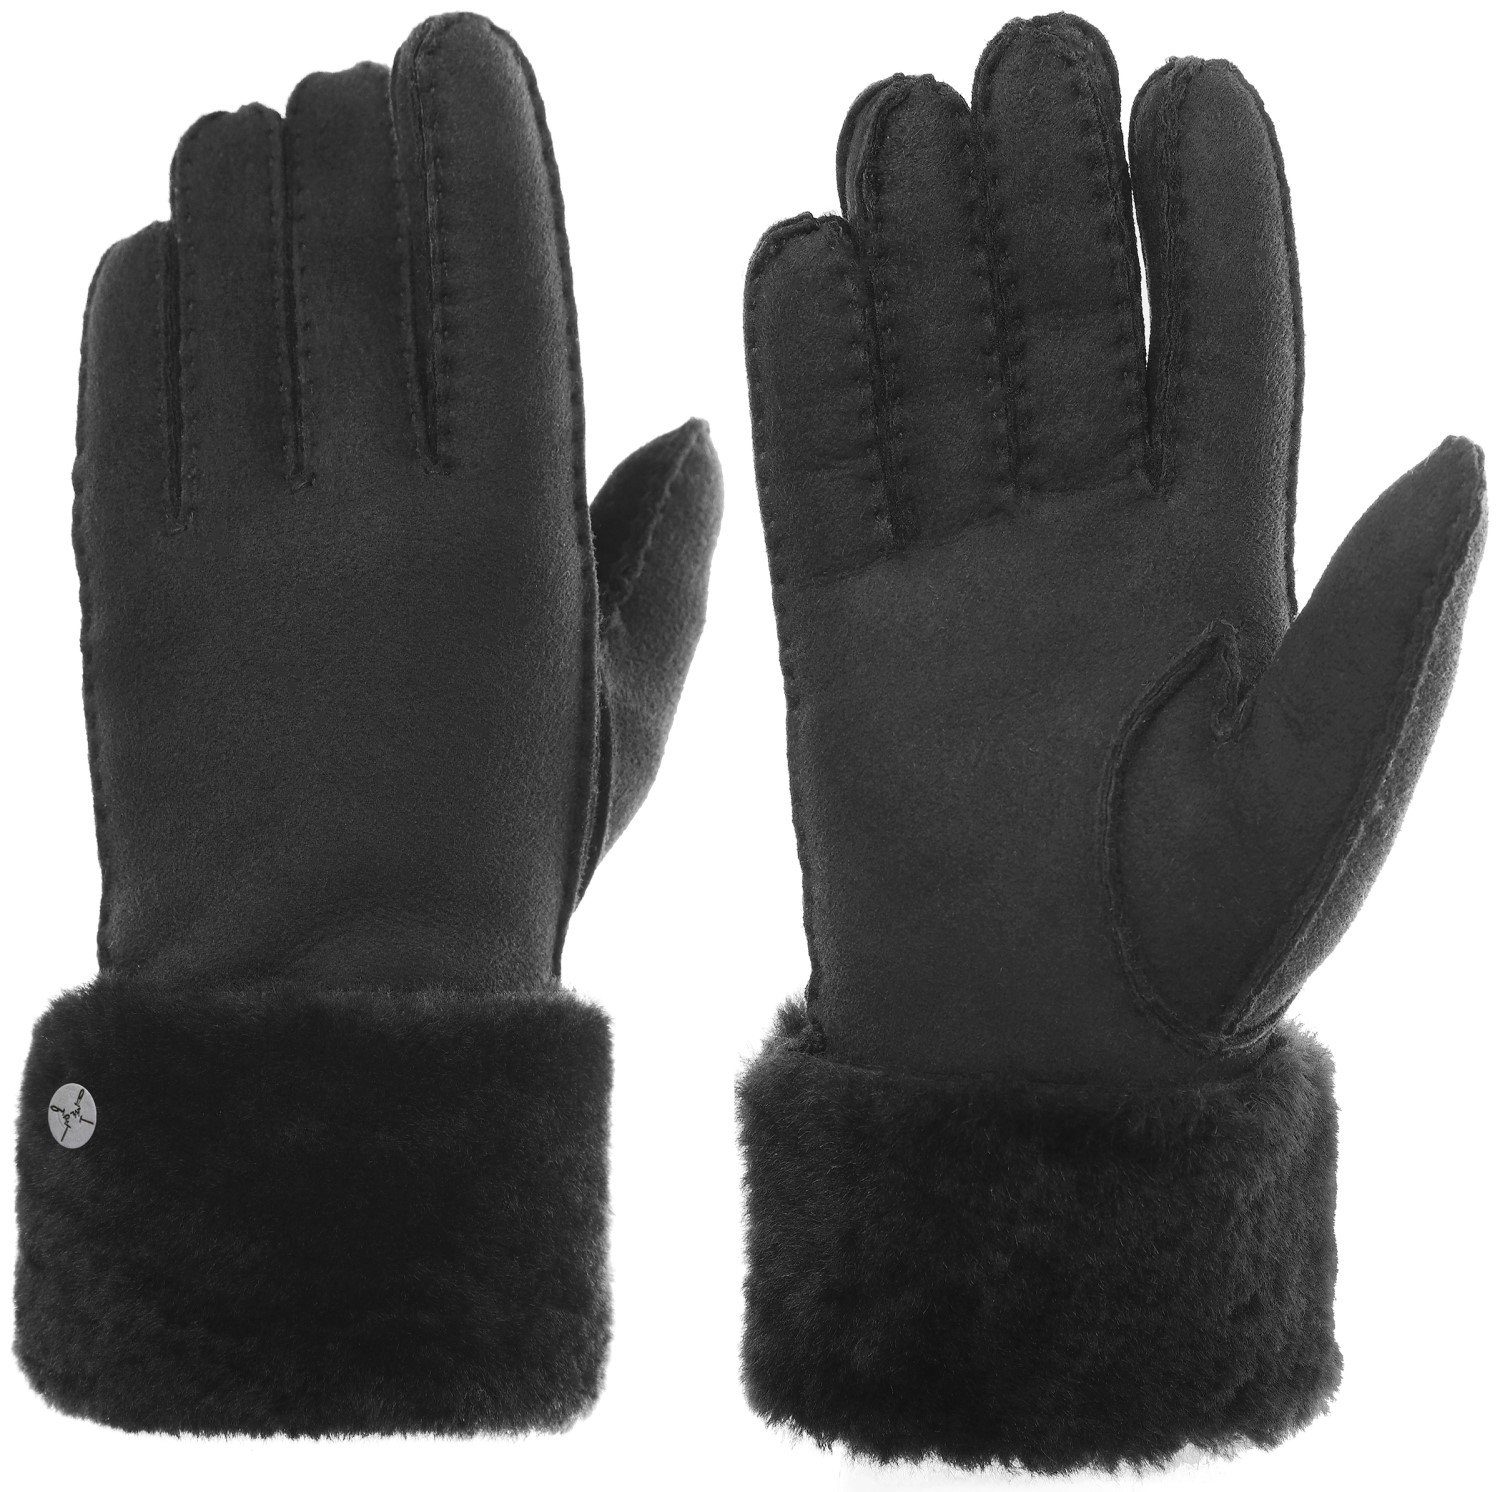 PEARLWOOD Lederhandschuhe warme Wildleder-Handschuhe Lammfell-Futter & Umschlag 200 black